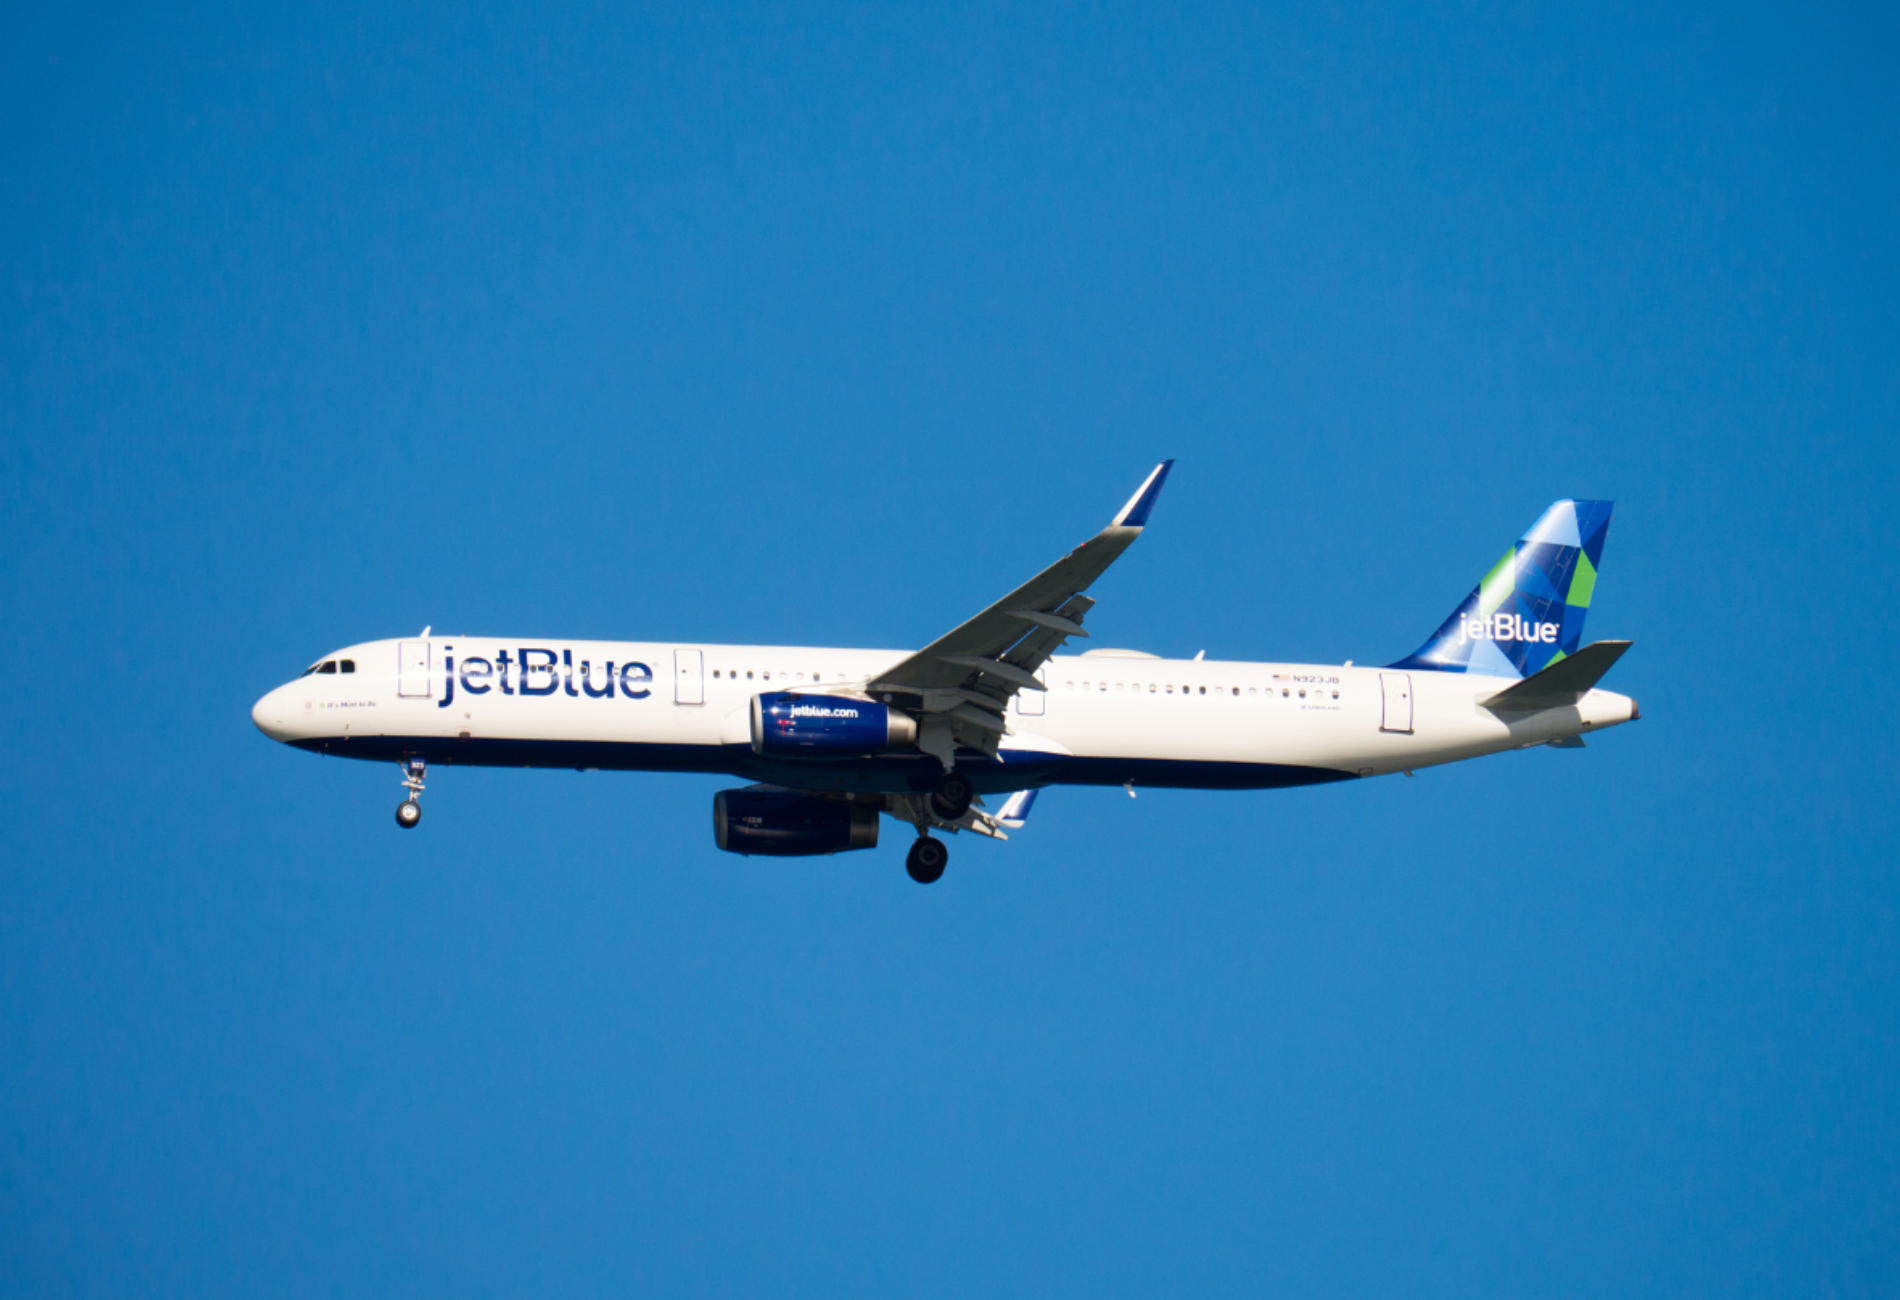 JetBlue plane in sky for story on jetblue sale on TrueBlue points